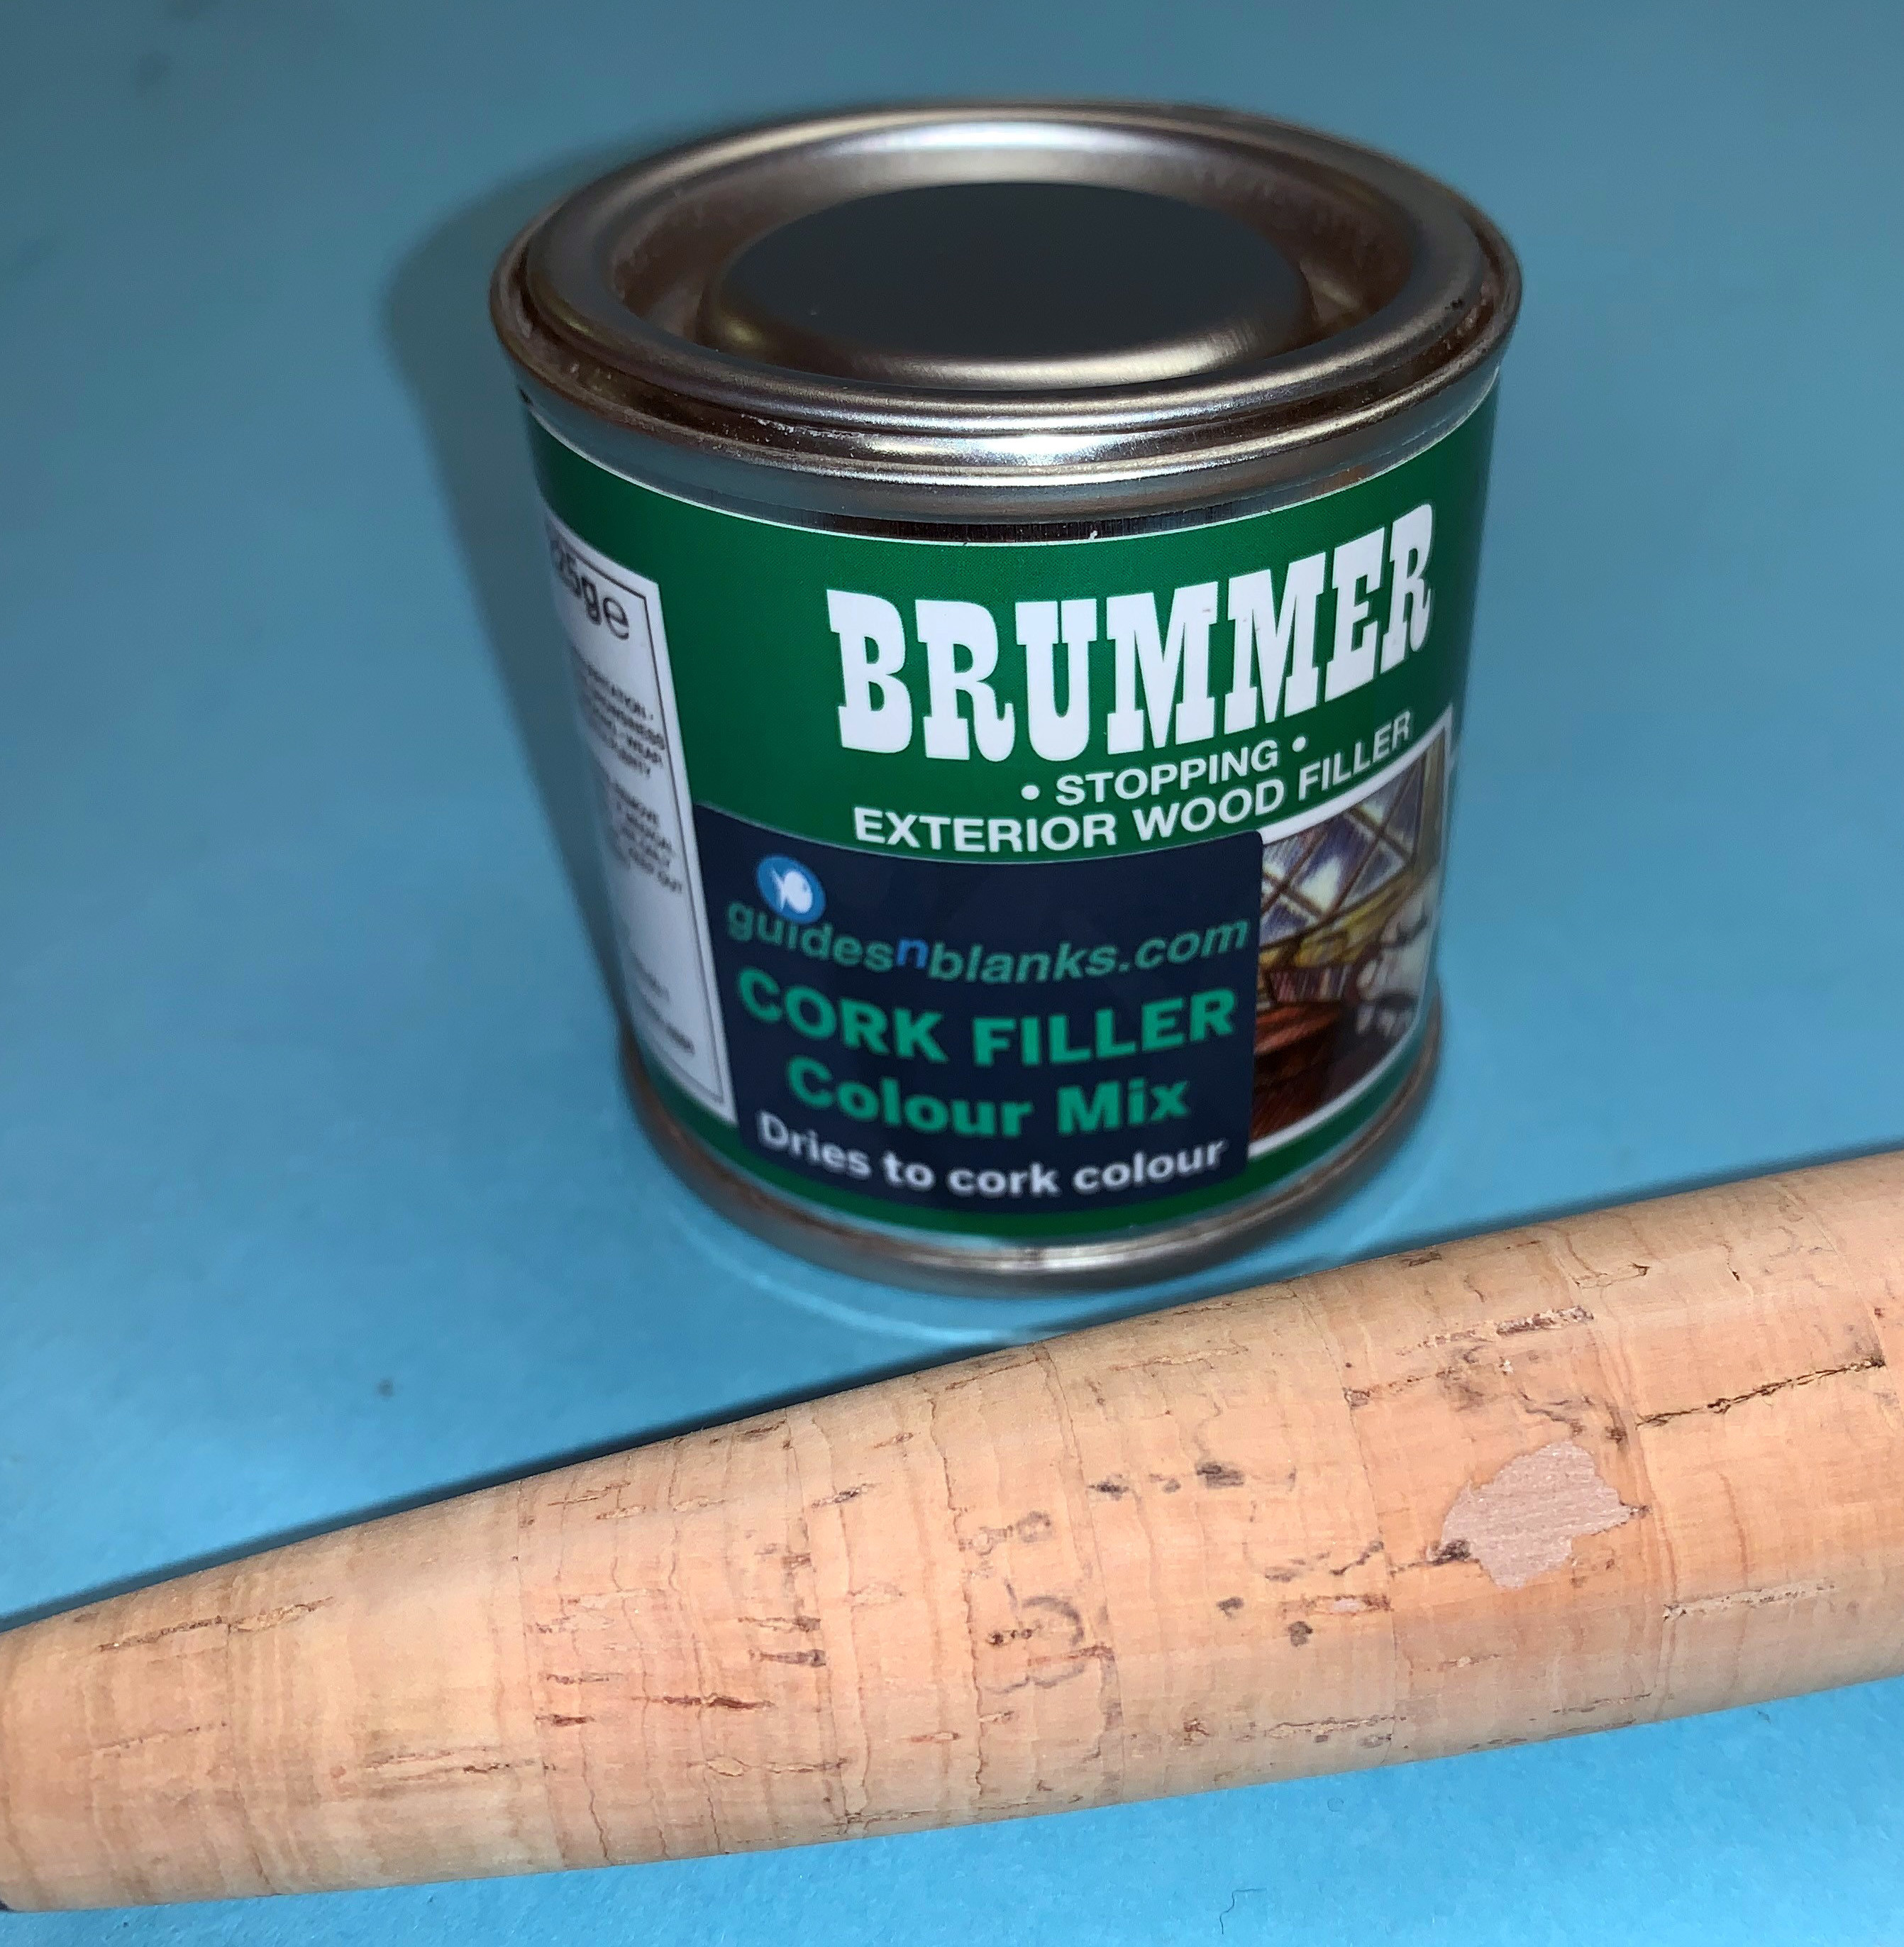 Cork Filler by Brummer - Other Rod Treatments, Sealers & fillers